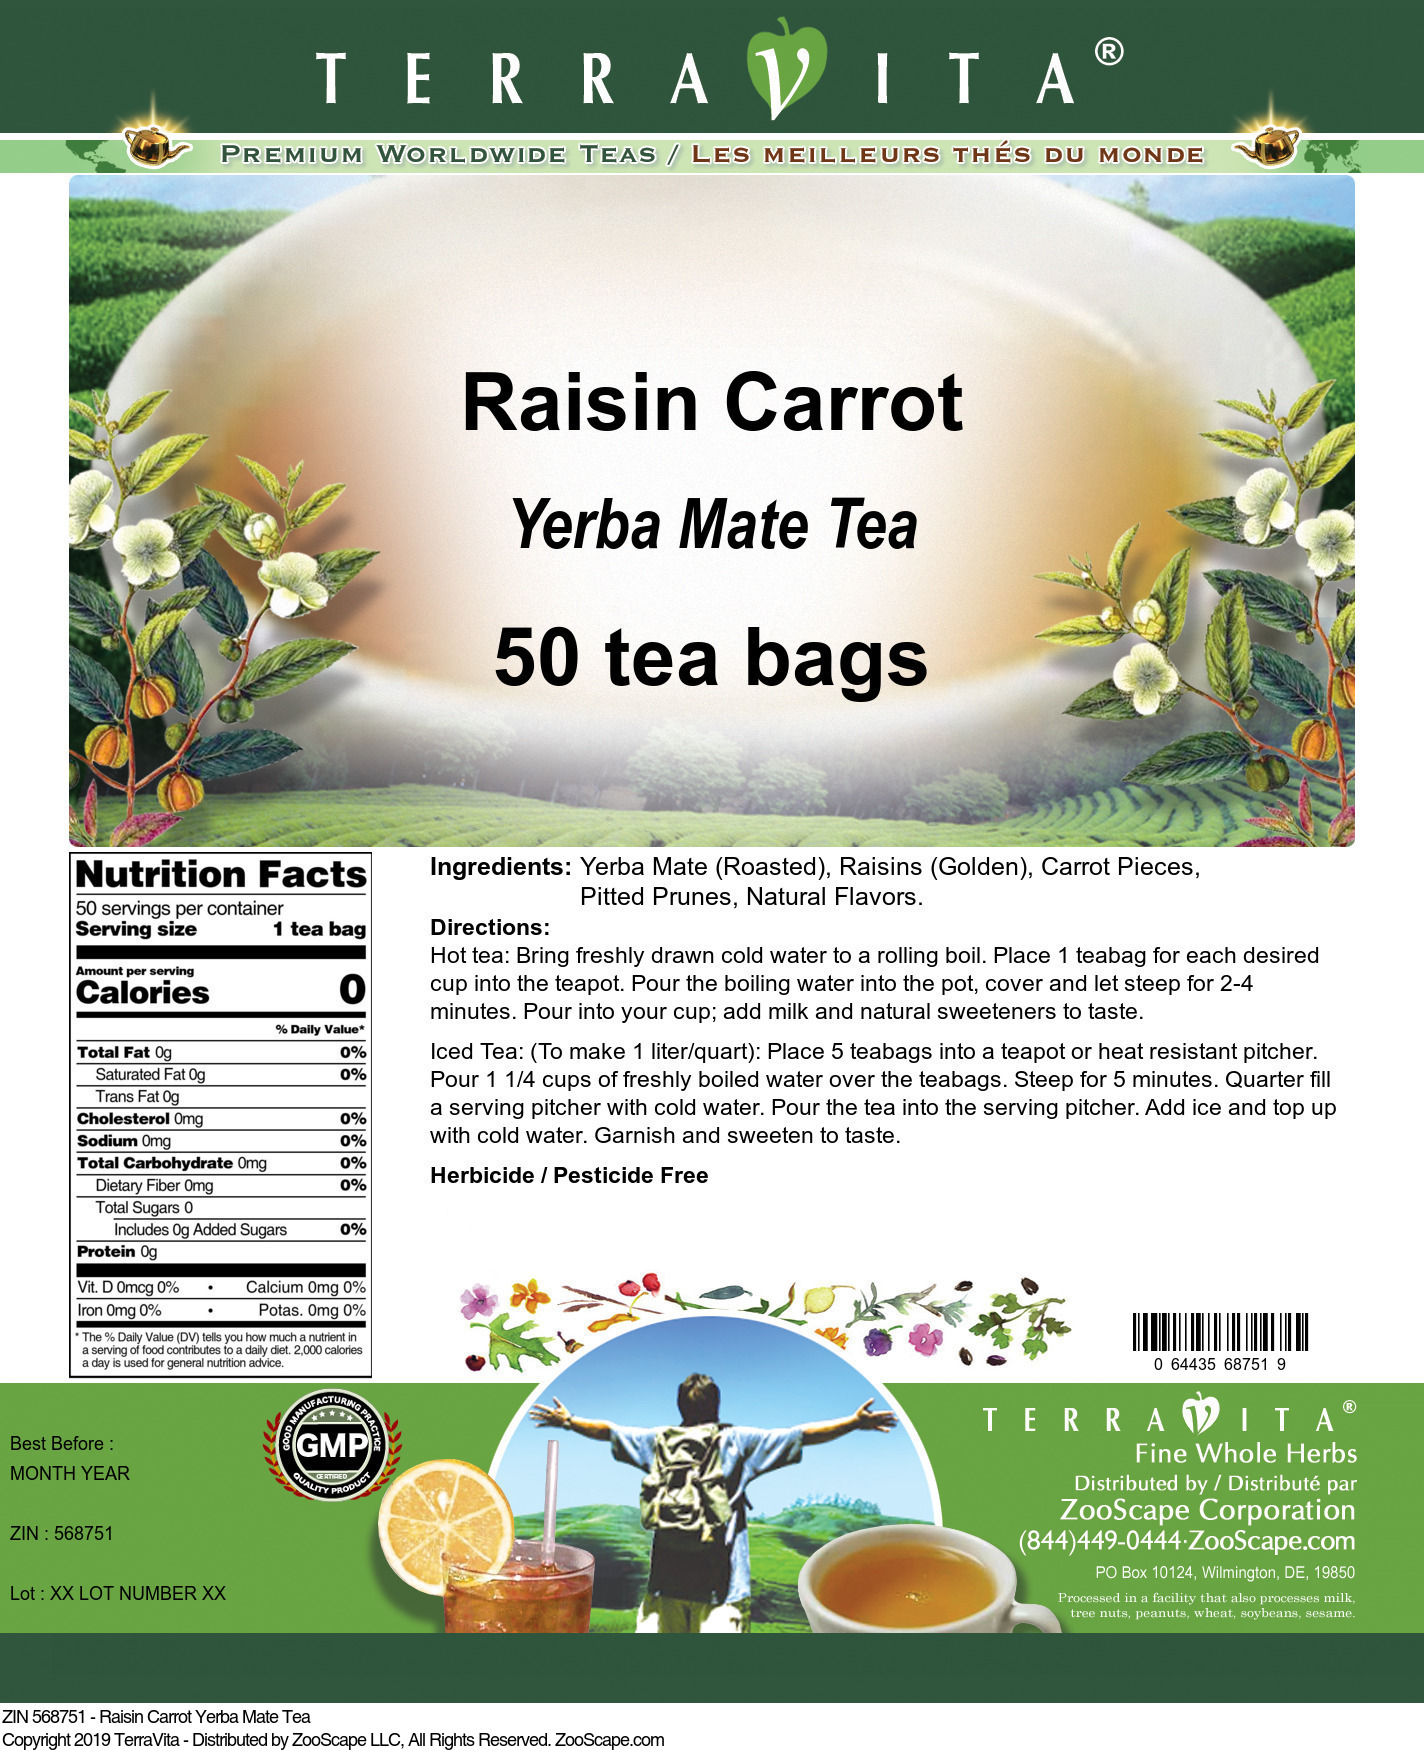 Raisin Carrot Yerba Mate Tea - Label